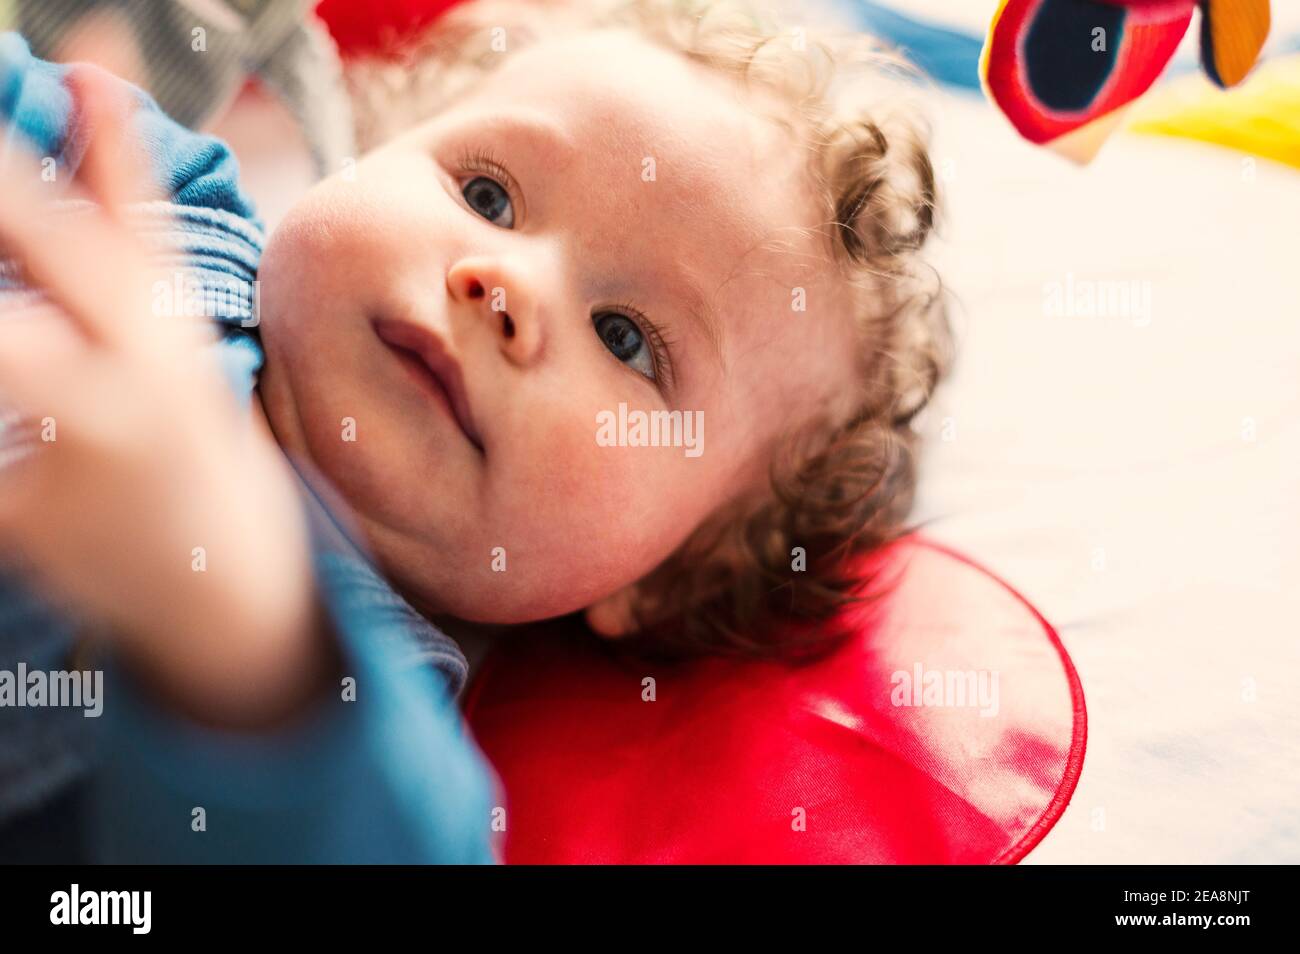 Baby boy exploring mobile toys Stock Photo